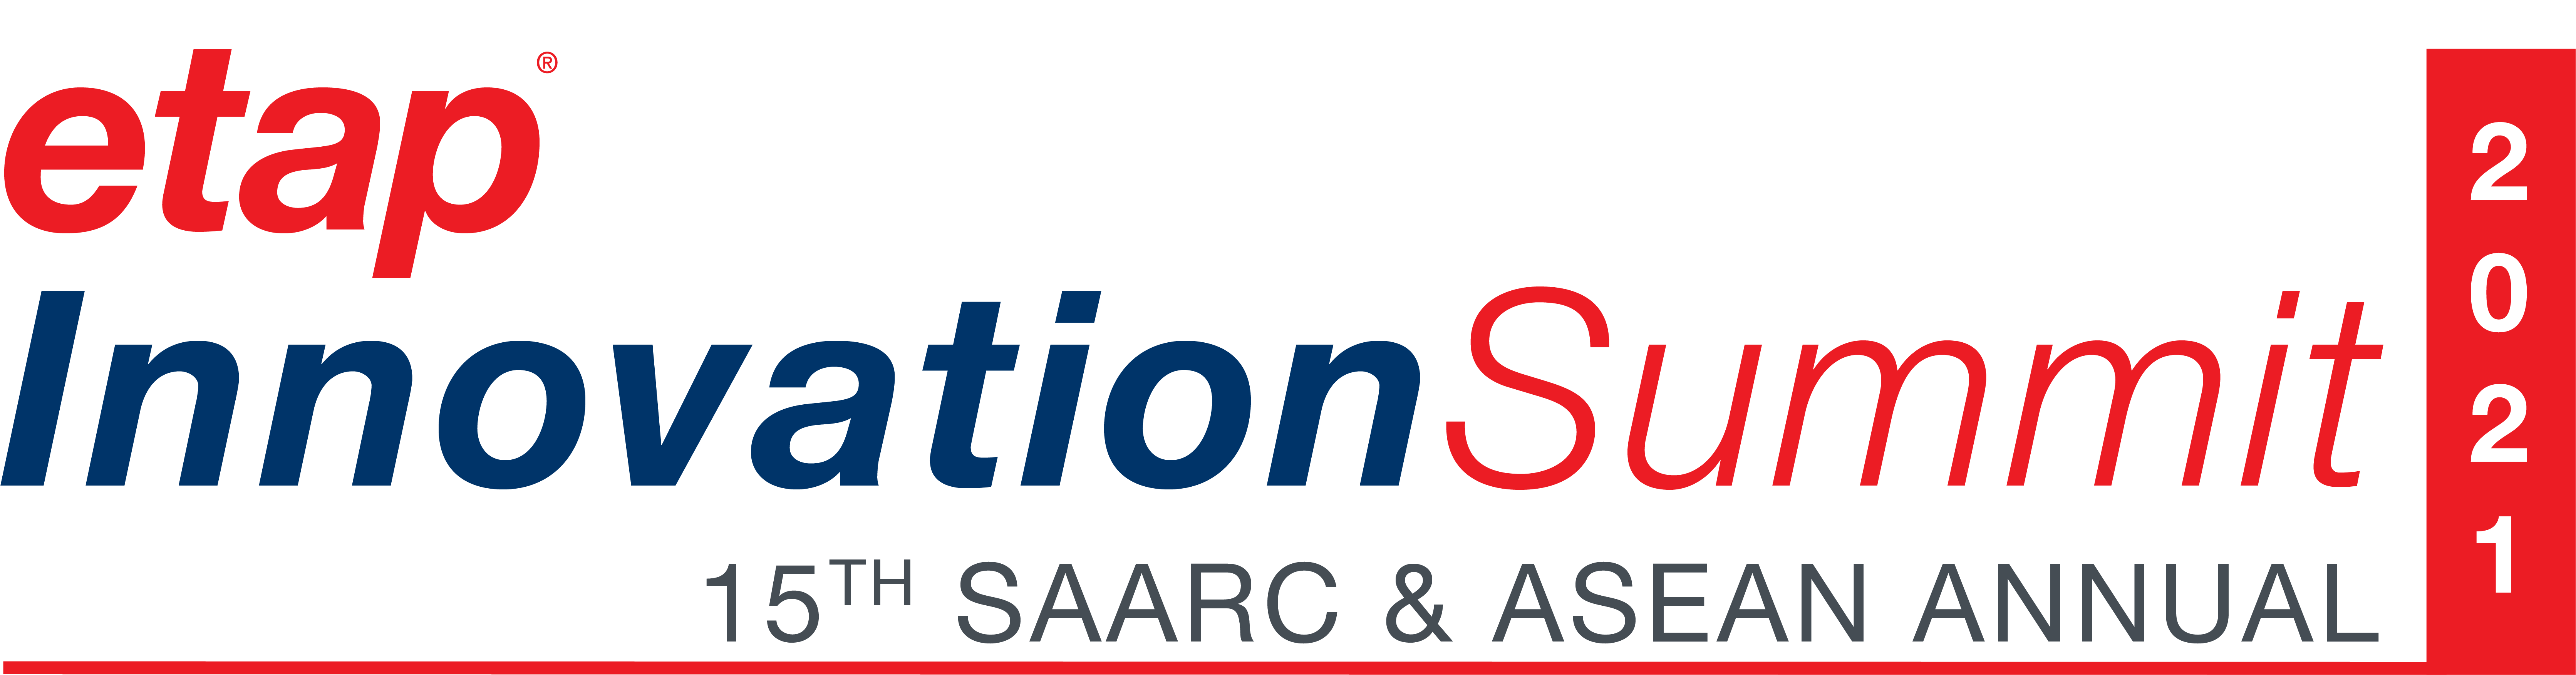 ETAP-Innovation-Summit-2021-SAARC-ASEAN-Rev2